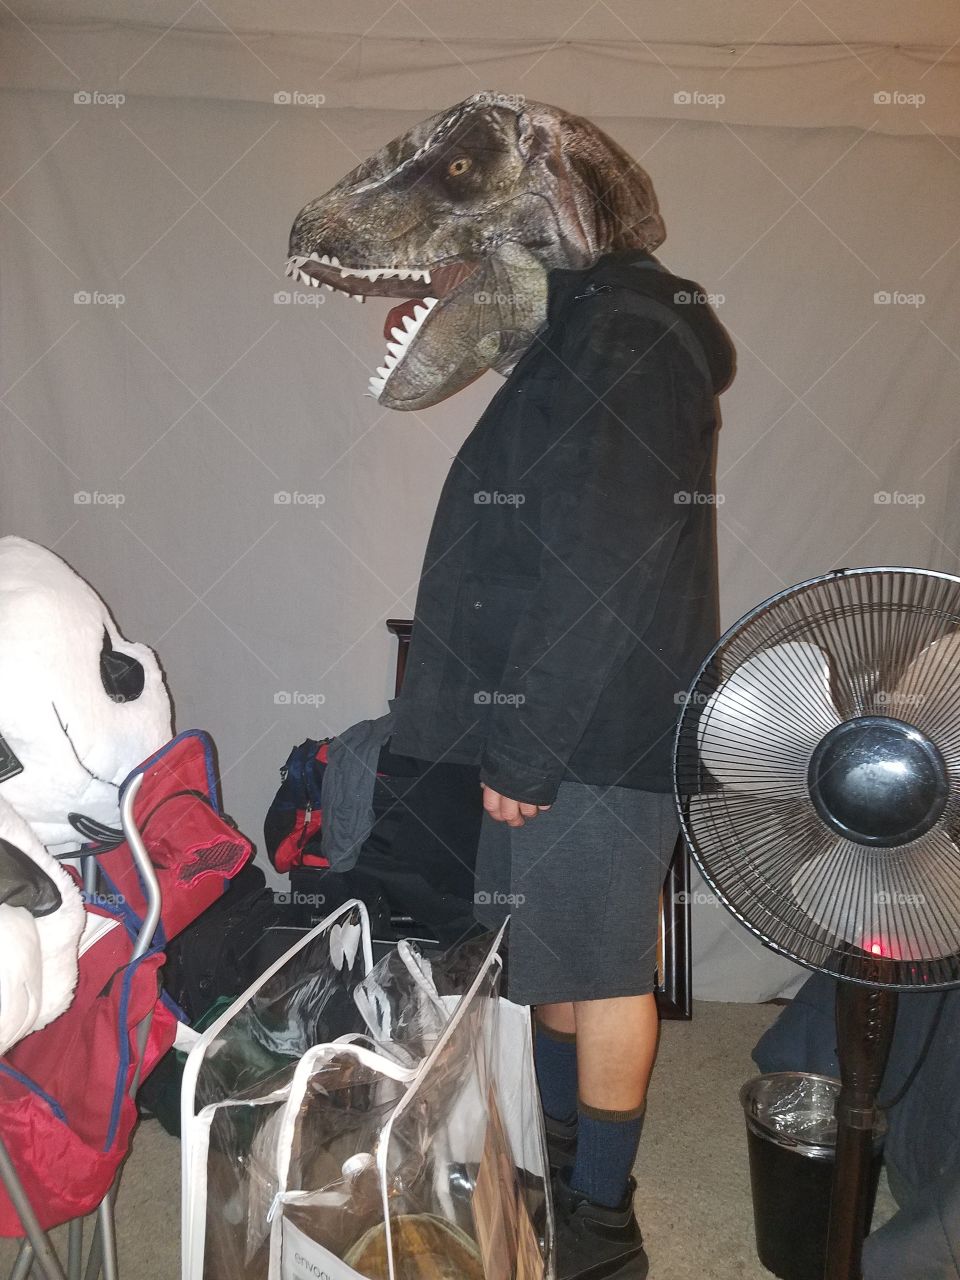 My boyfriend with a Dinosaur head on from the movie Jurassic Park.